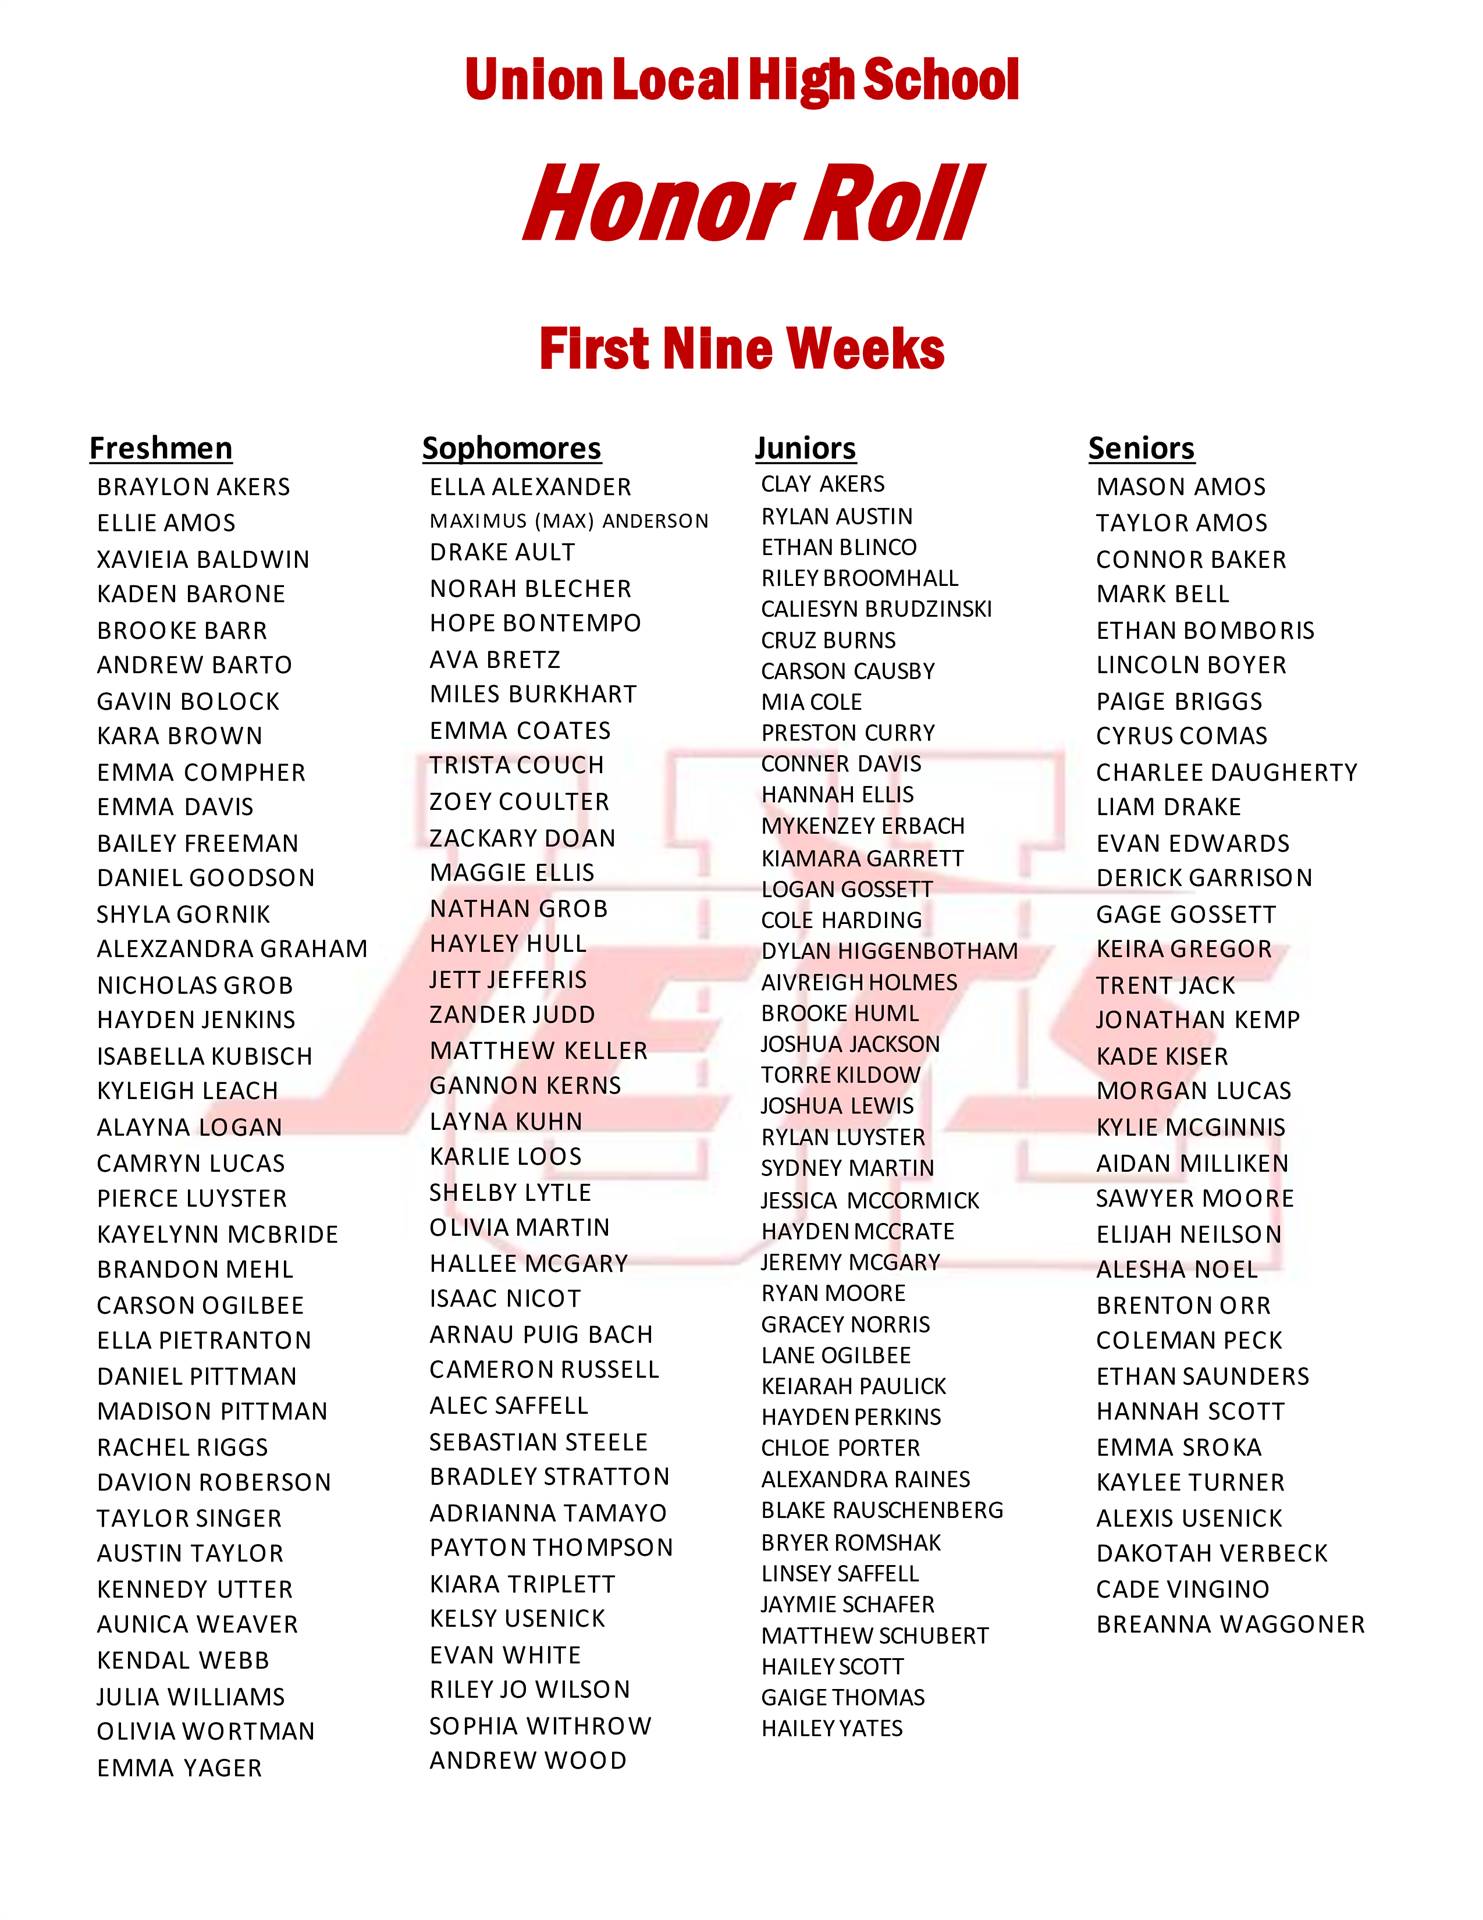 Honor Roll List First Nine Weeks